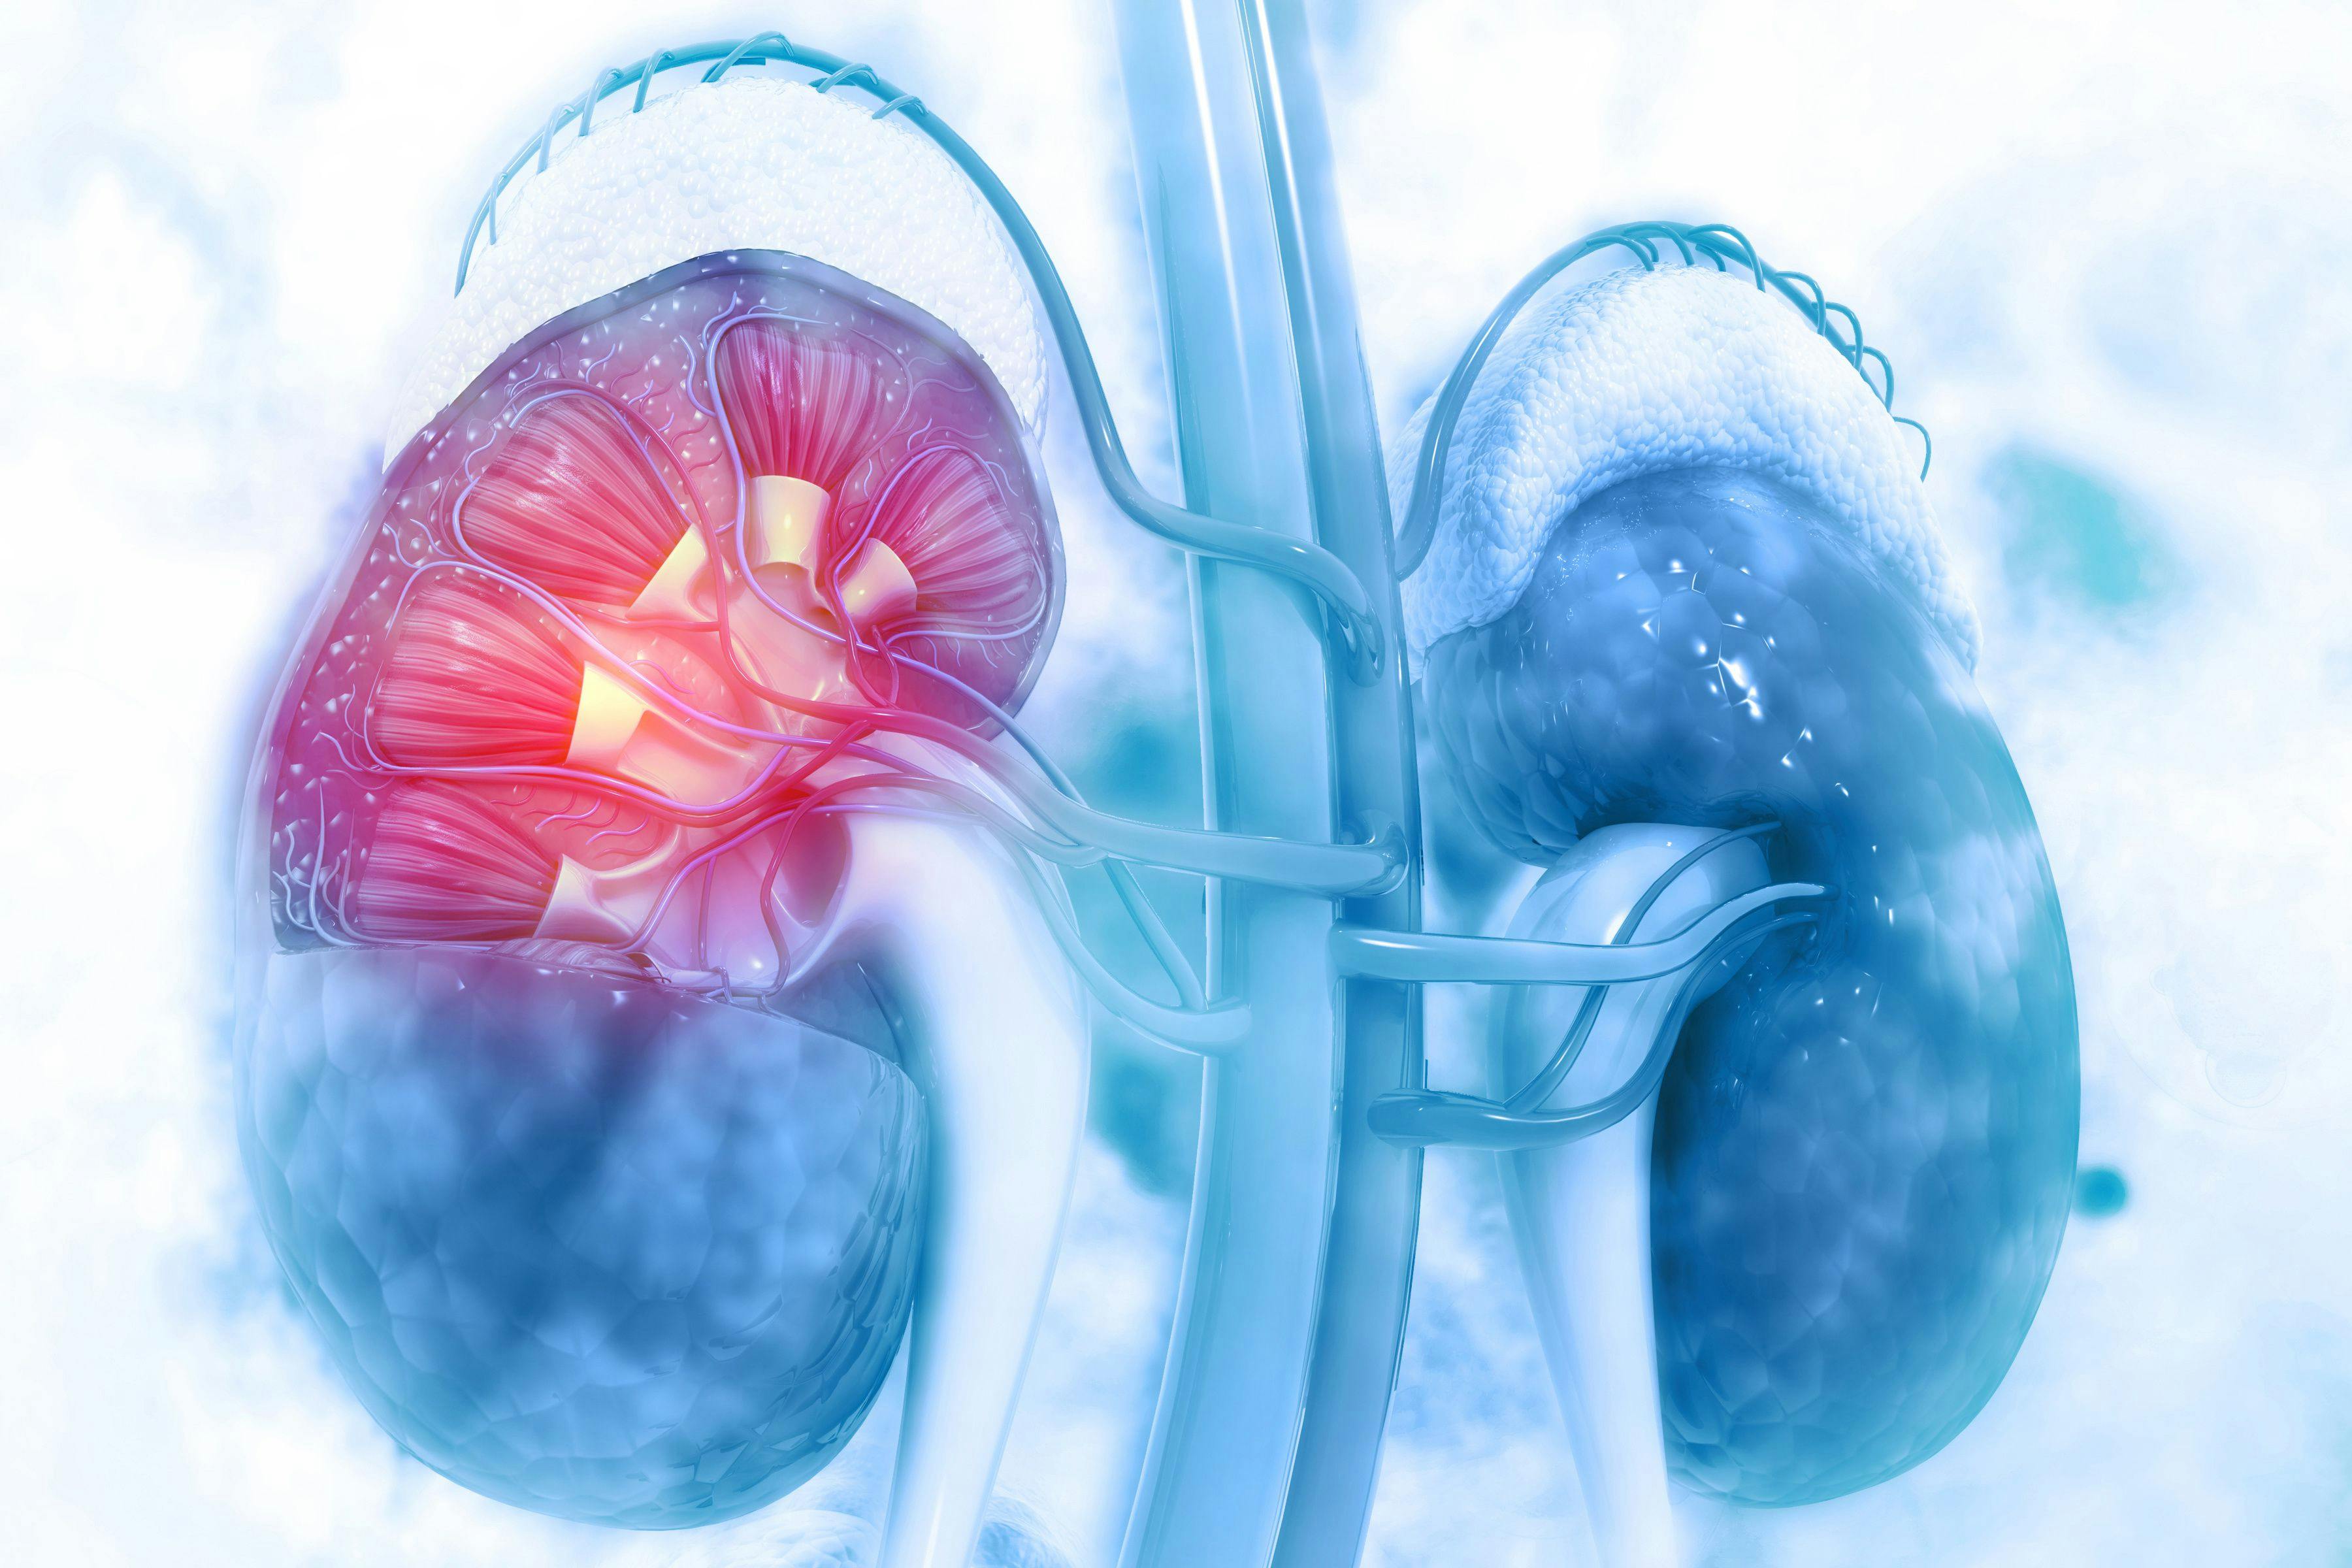 Human kidney cross section on scientific background: ©Crystal Light - stock.adobe.com